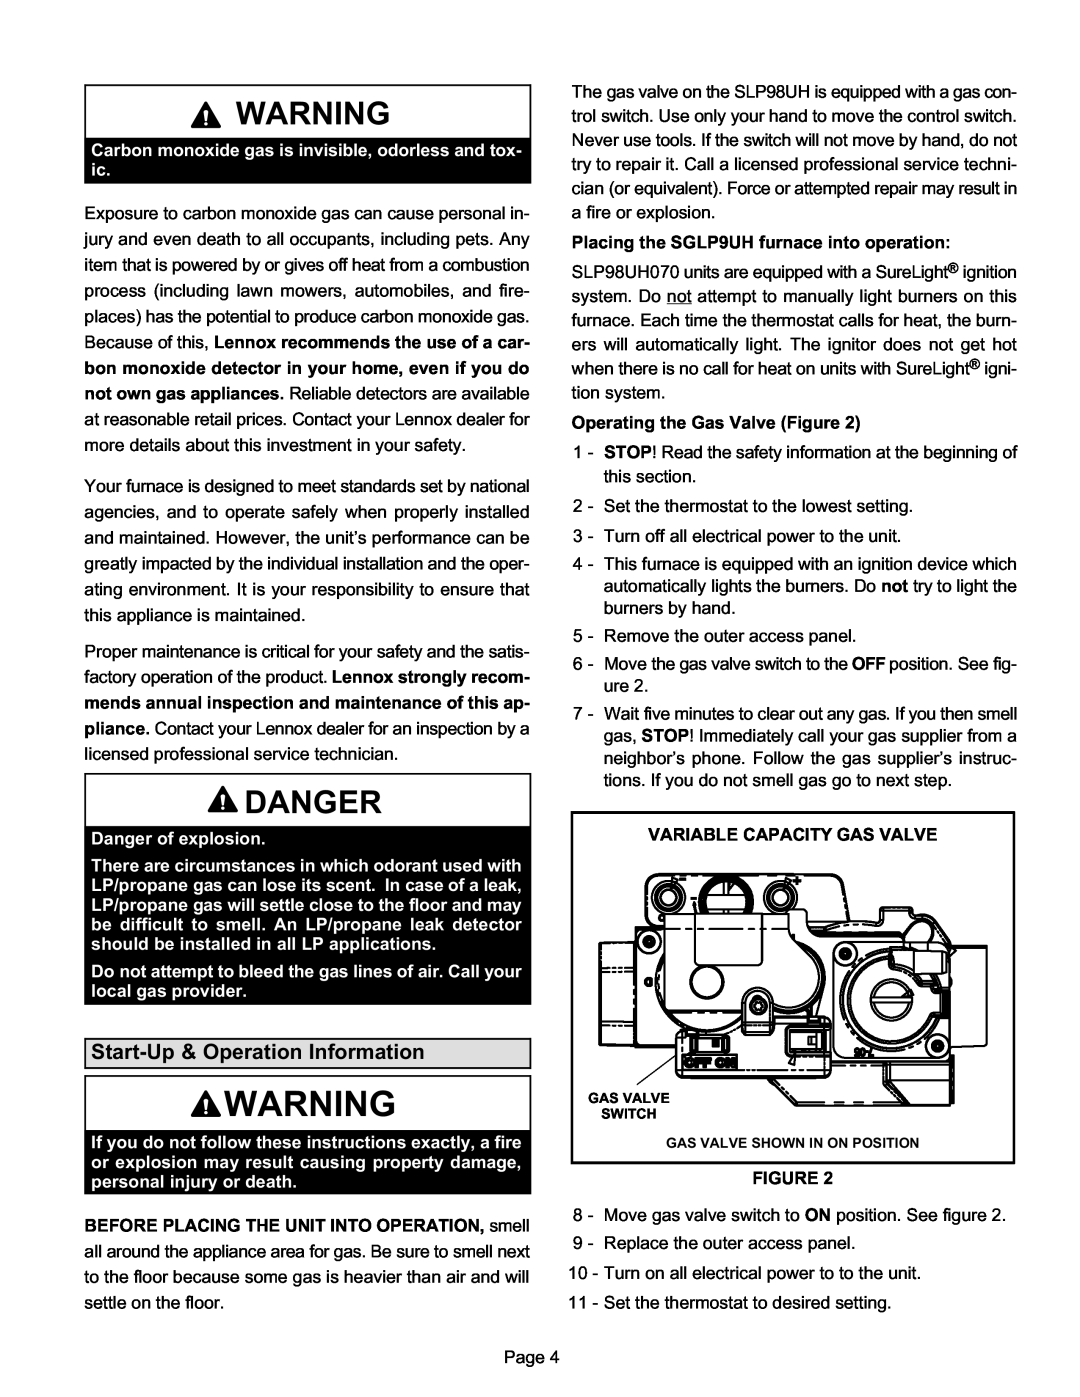 Lennox International Inc slp98uh, cariable capacity gas furnace manual Danger, Start−Up & Operation Information 